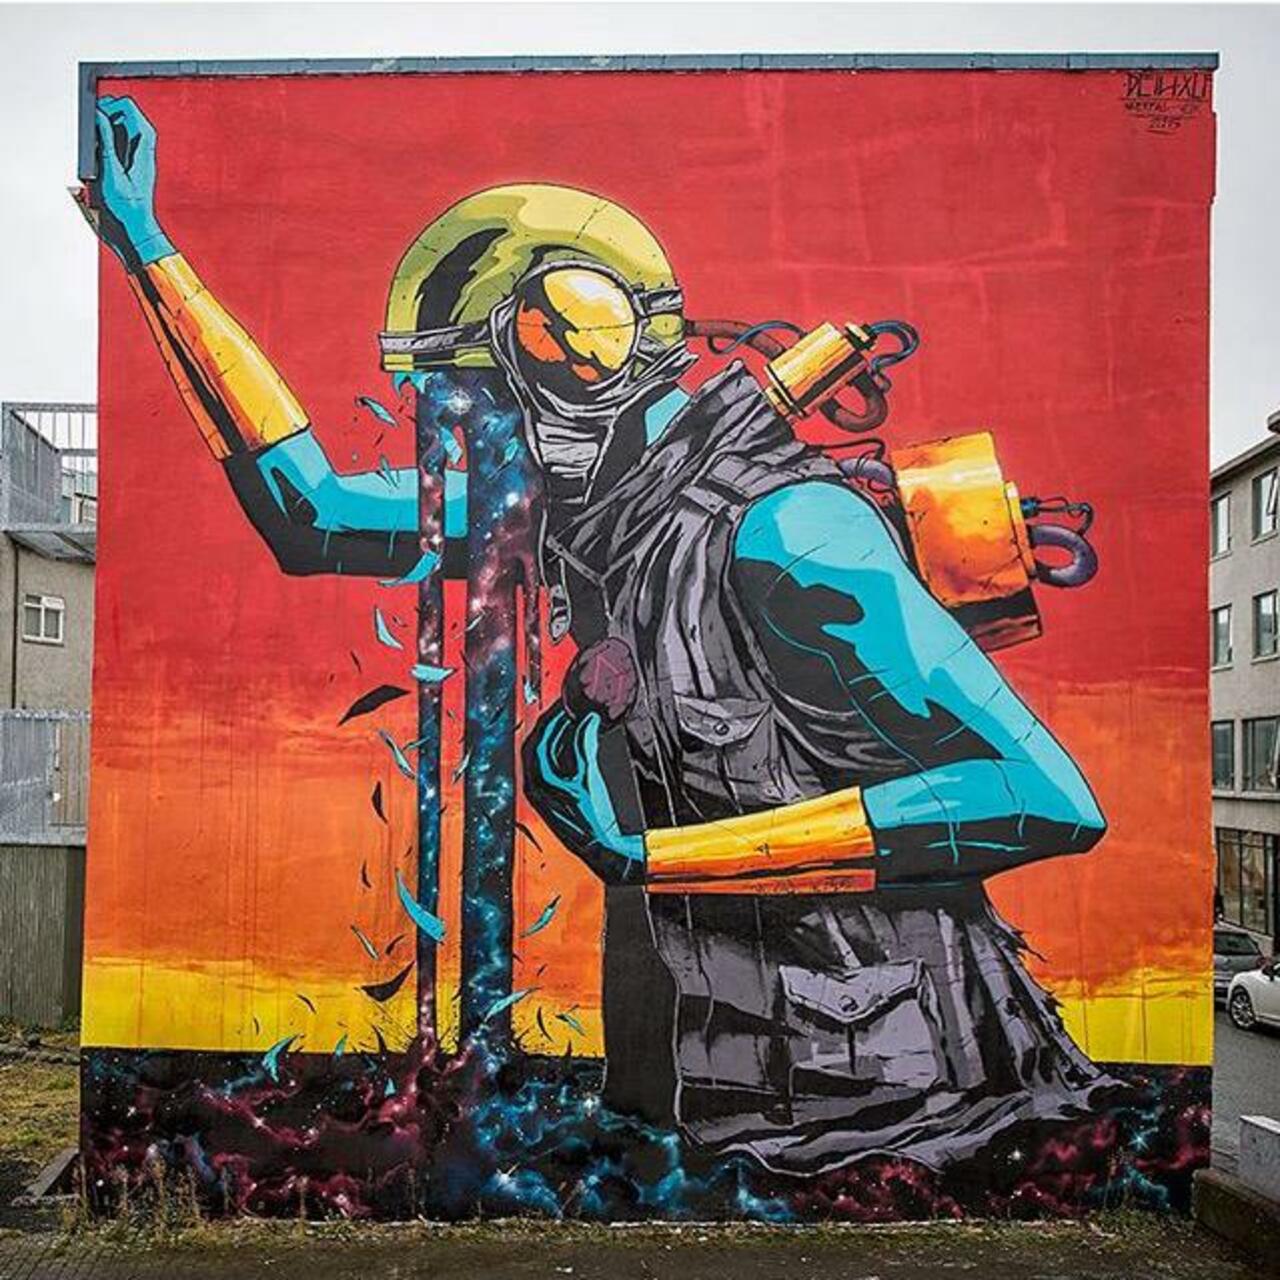 Street Art by Deih in Reykjavik 

#art #graffiti #mural #streetart https://t.co/W1qASDmSkh … http://twitter.com/GoogleStreetArt/status/649658114984275968/photo/1/large?utm_source=fb&utm_medium=fb&utm_campaign=charlesjackso14&utm_content=649659013412618240